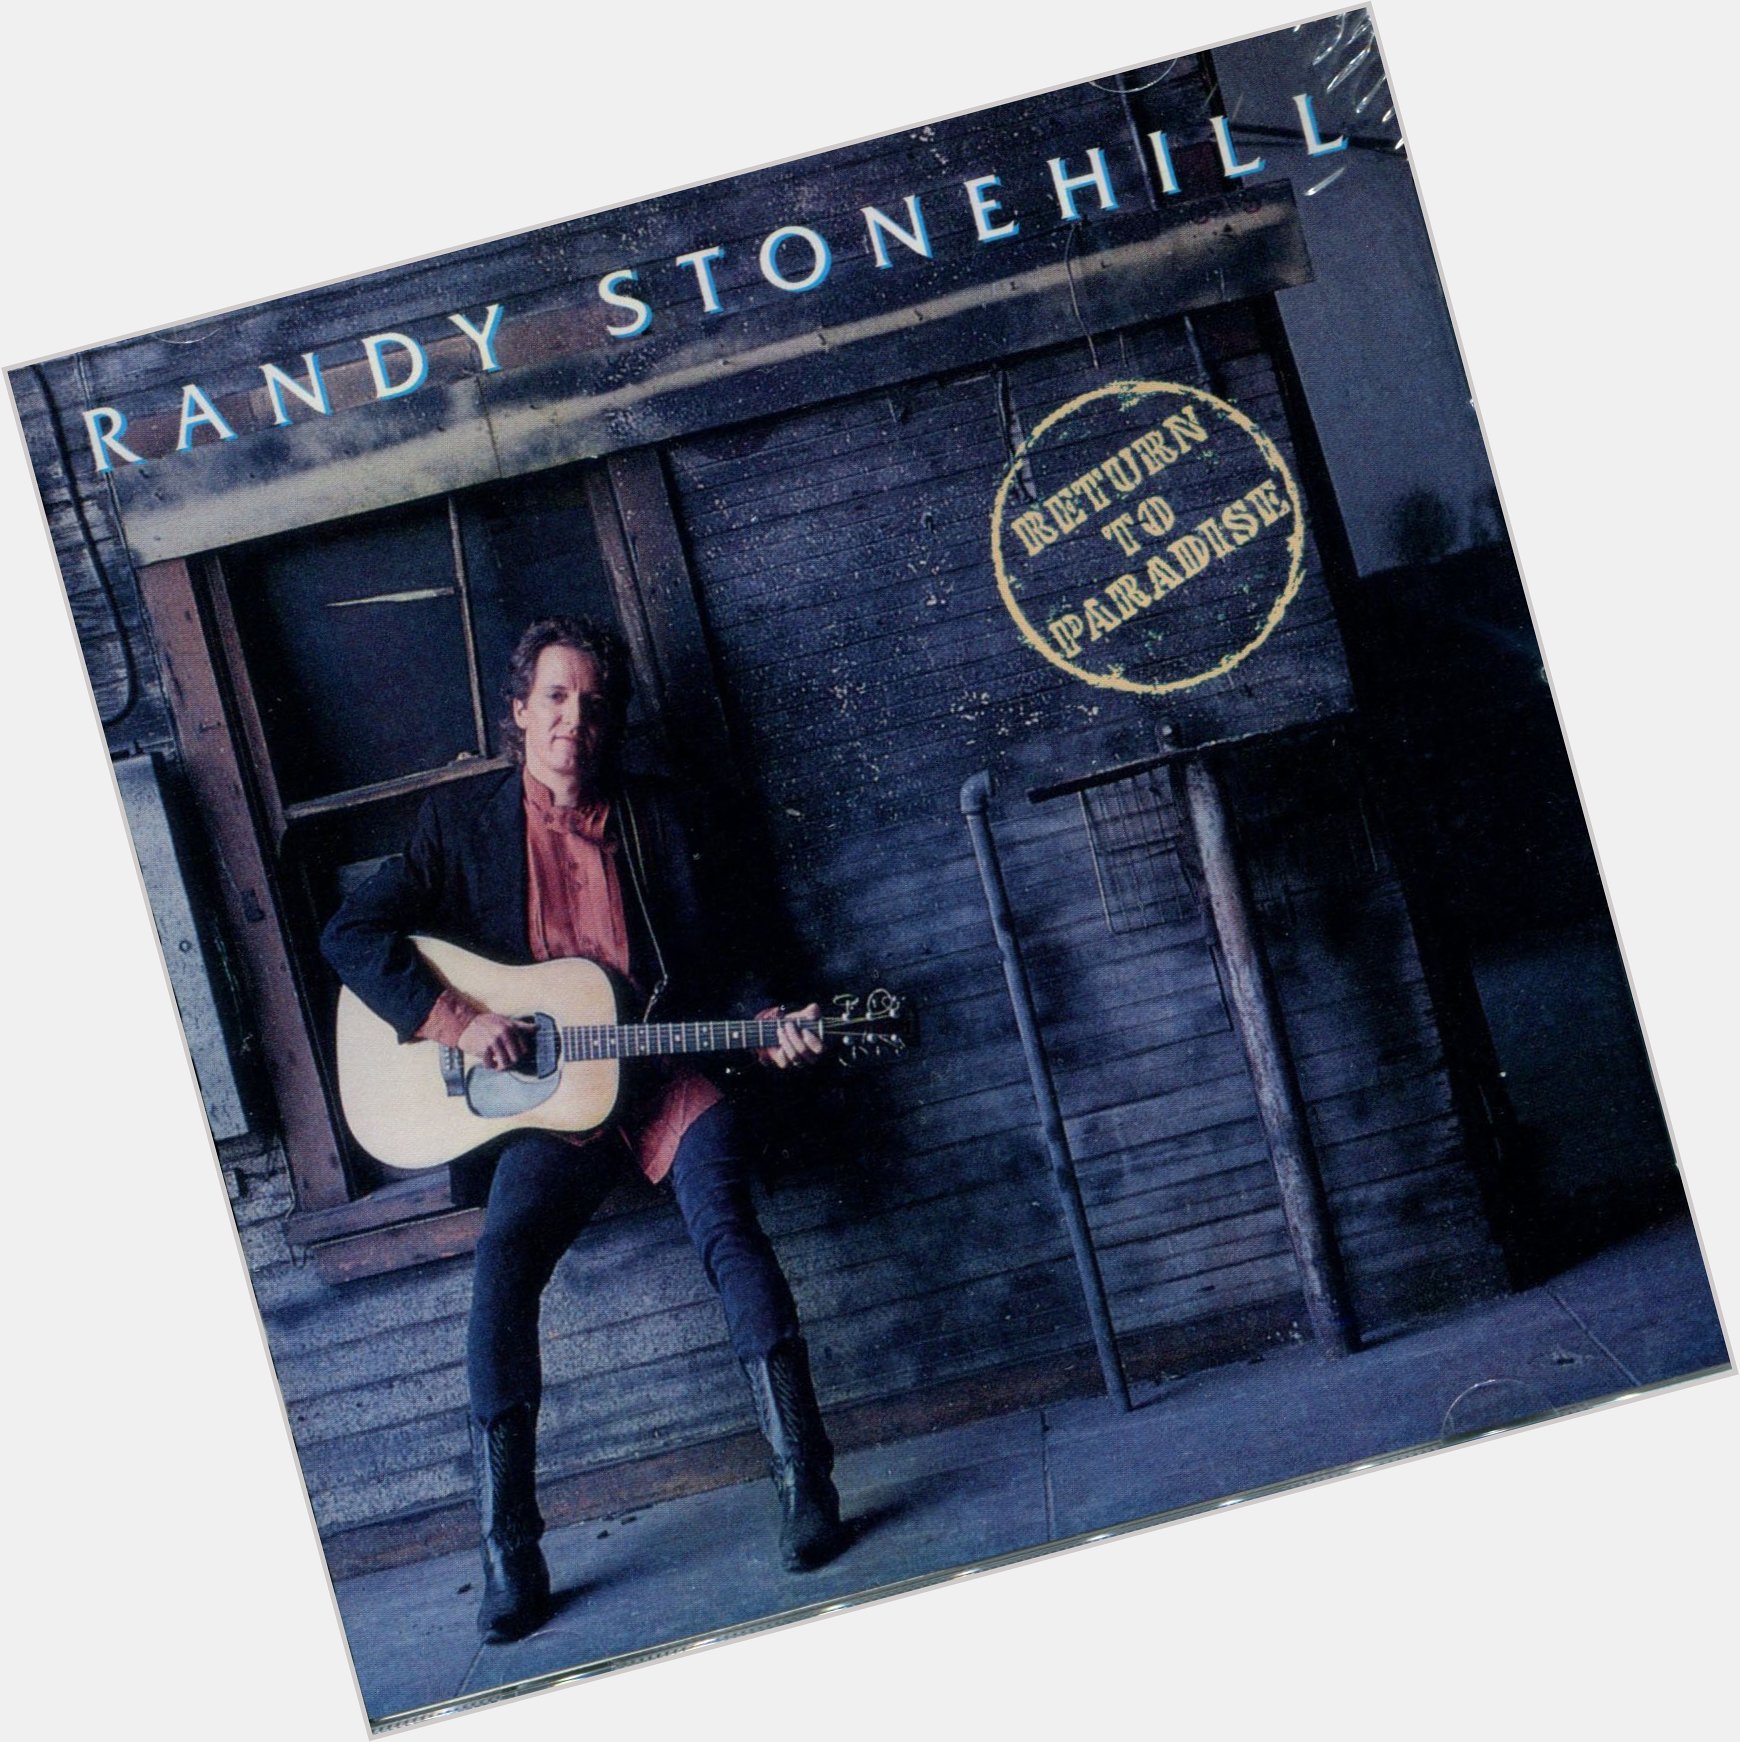 Randy Stonehill dating 2